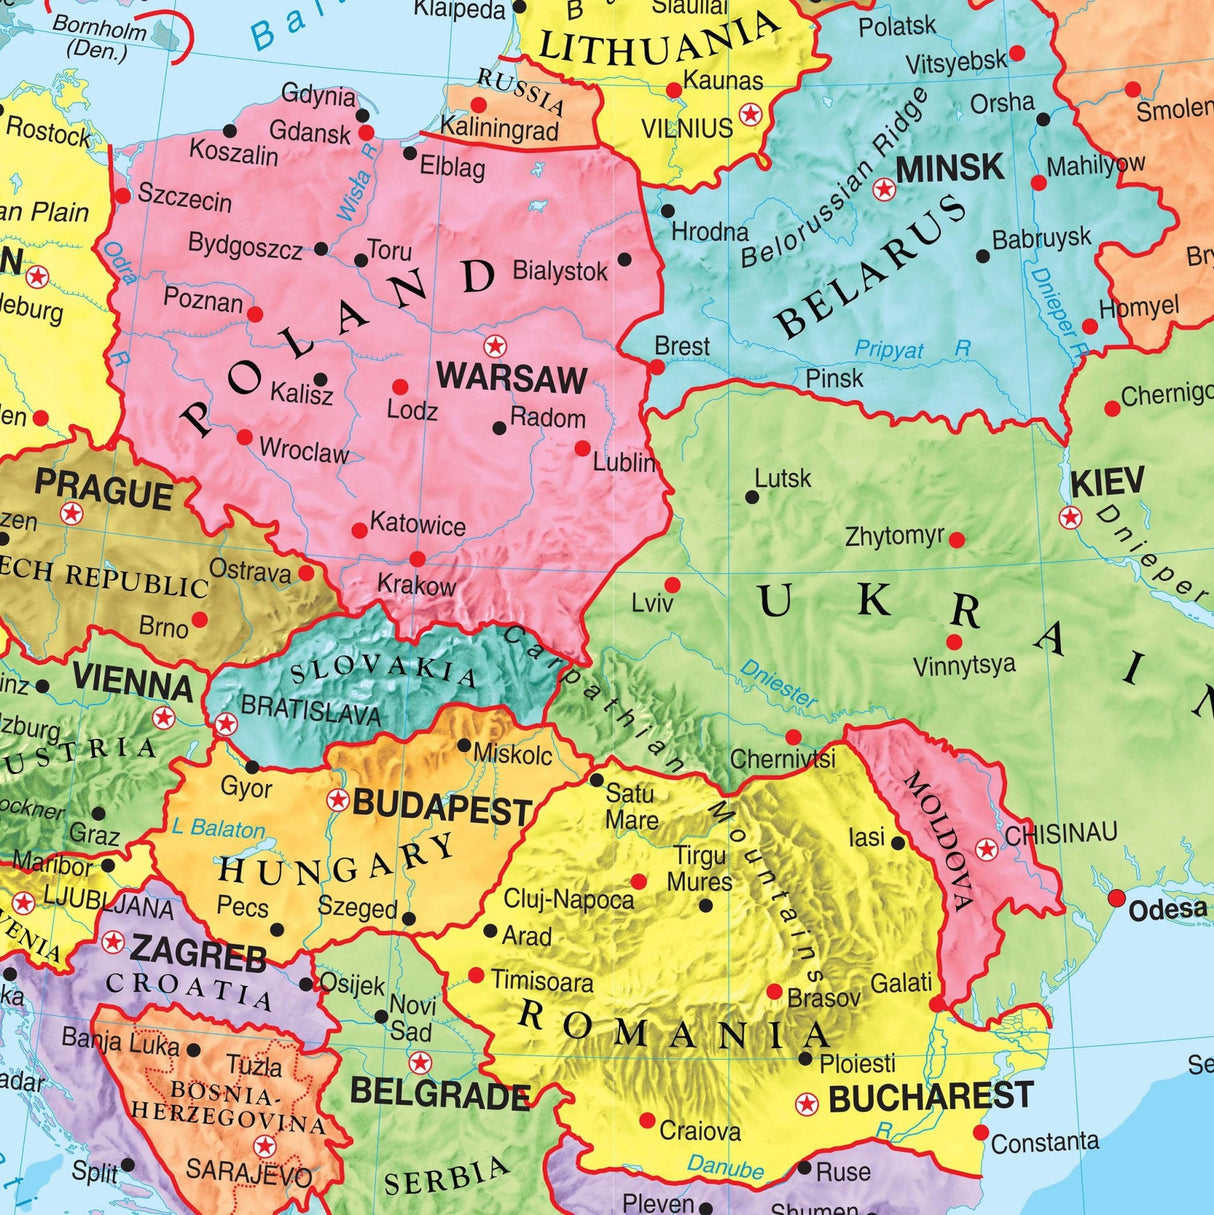 Europe Advanced Political Wall Map - KA-EUR-ADV-POL-49X42-PAPER - Ultimate Globes